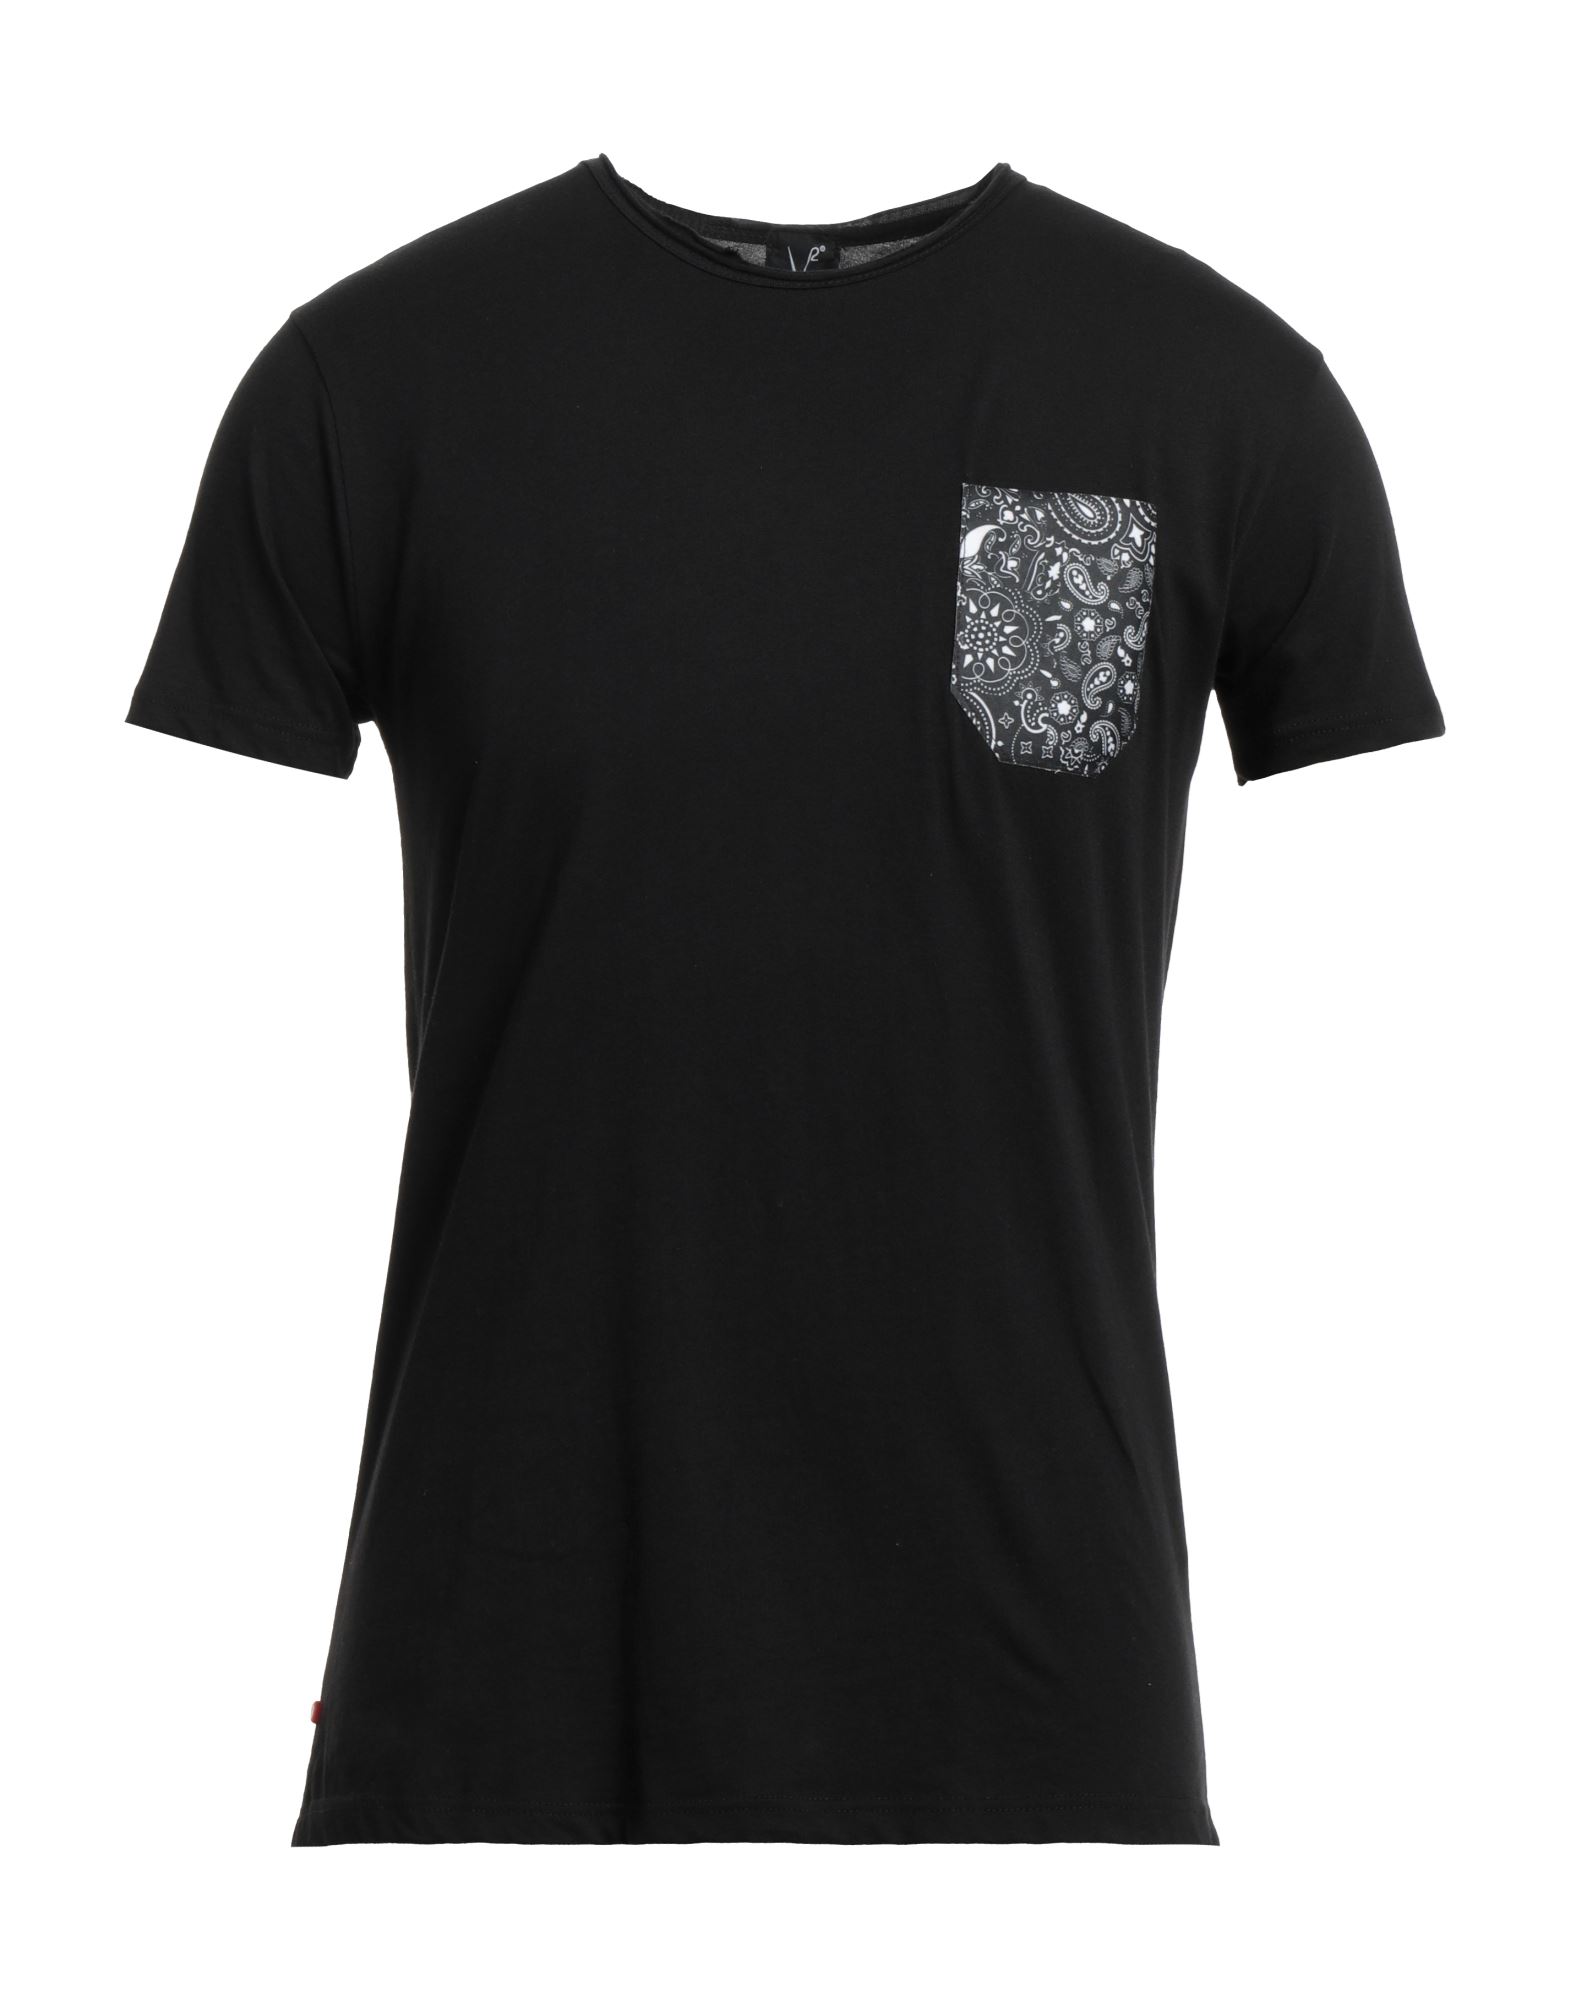 V2® Brand T-shirts In Black